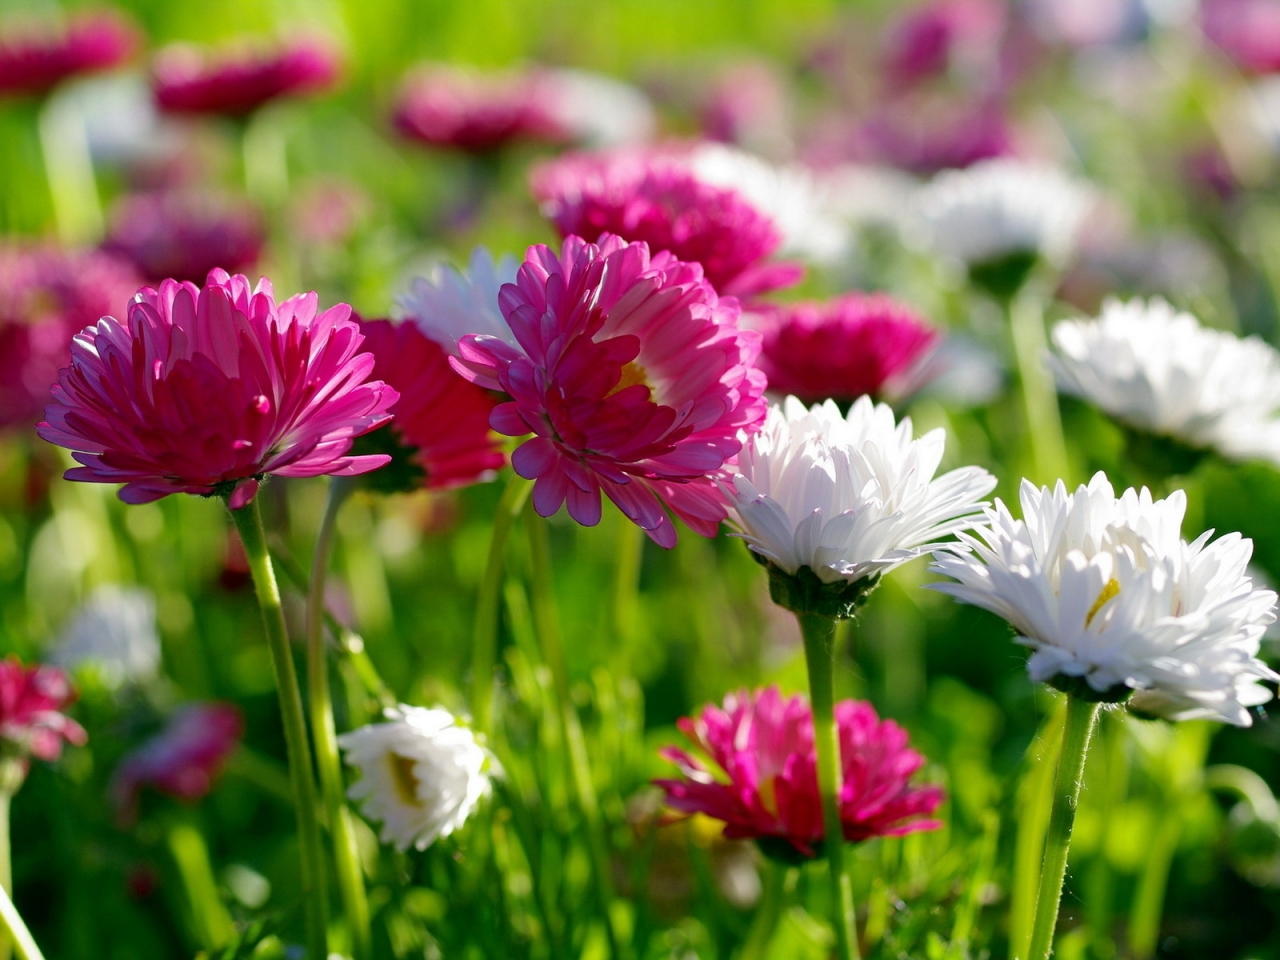 The Chrysanthemum for 1280 x 960 resolution